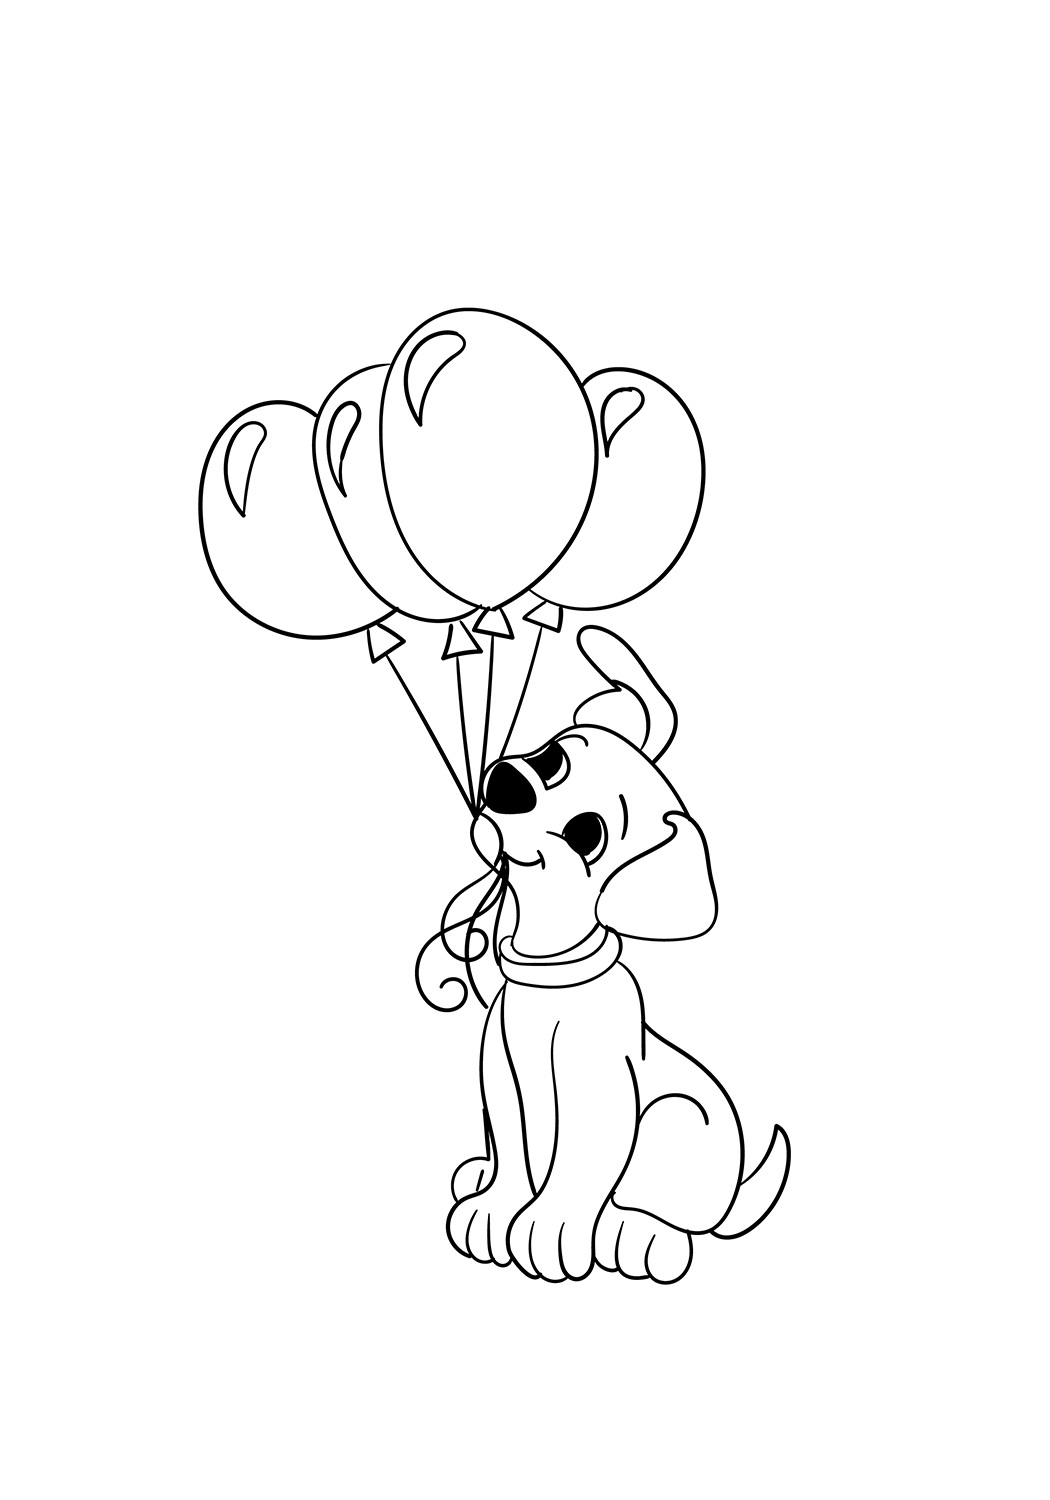 Puppy With Balloons para colorir